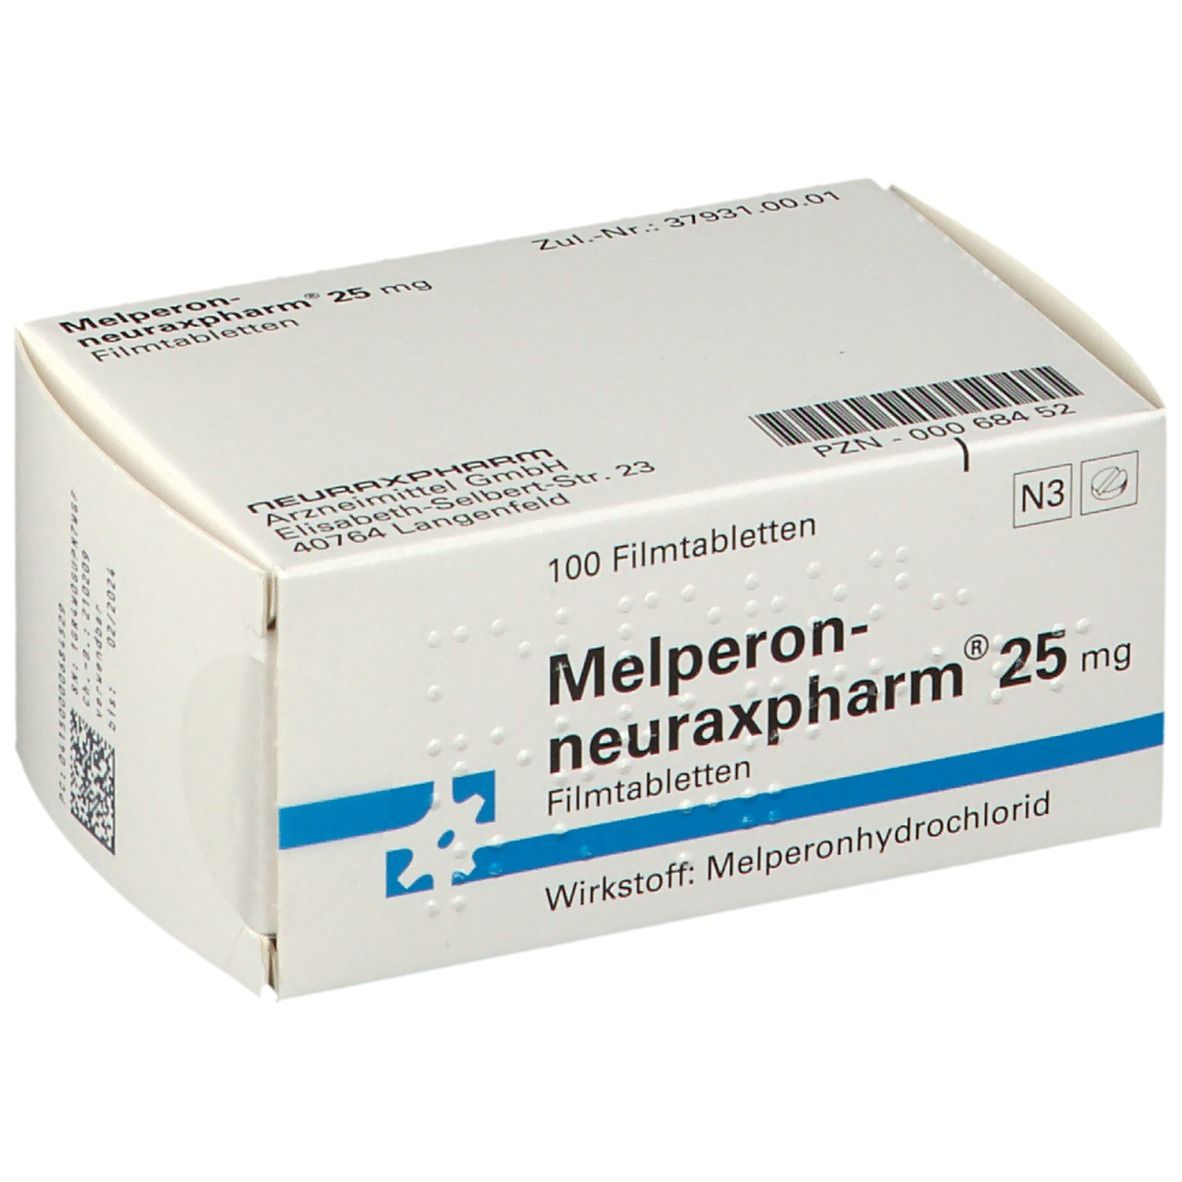 Melperon-neuraxpharm® 25 mg